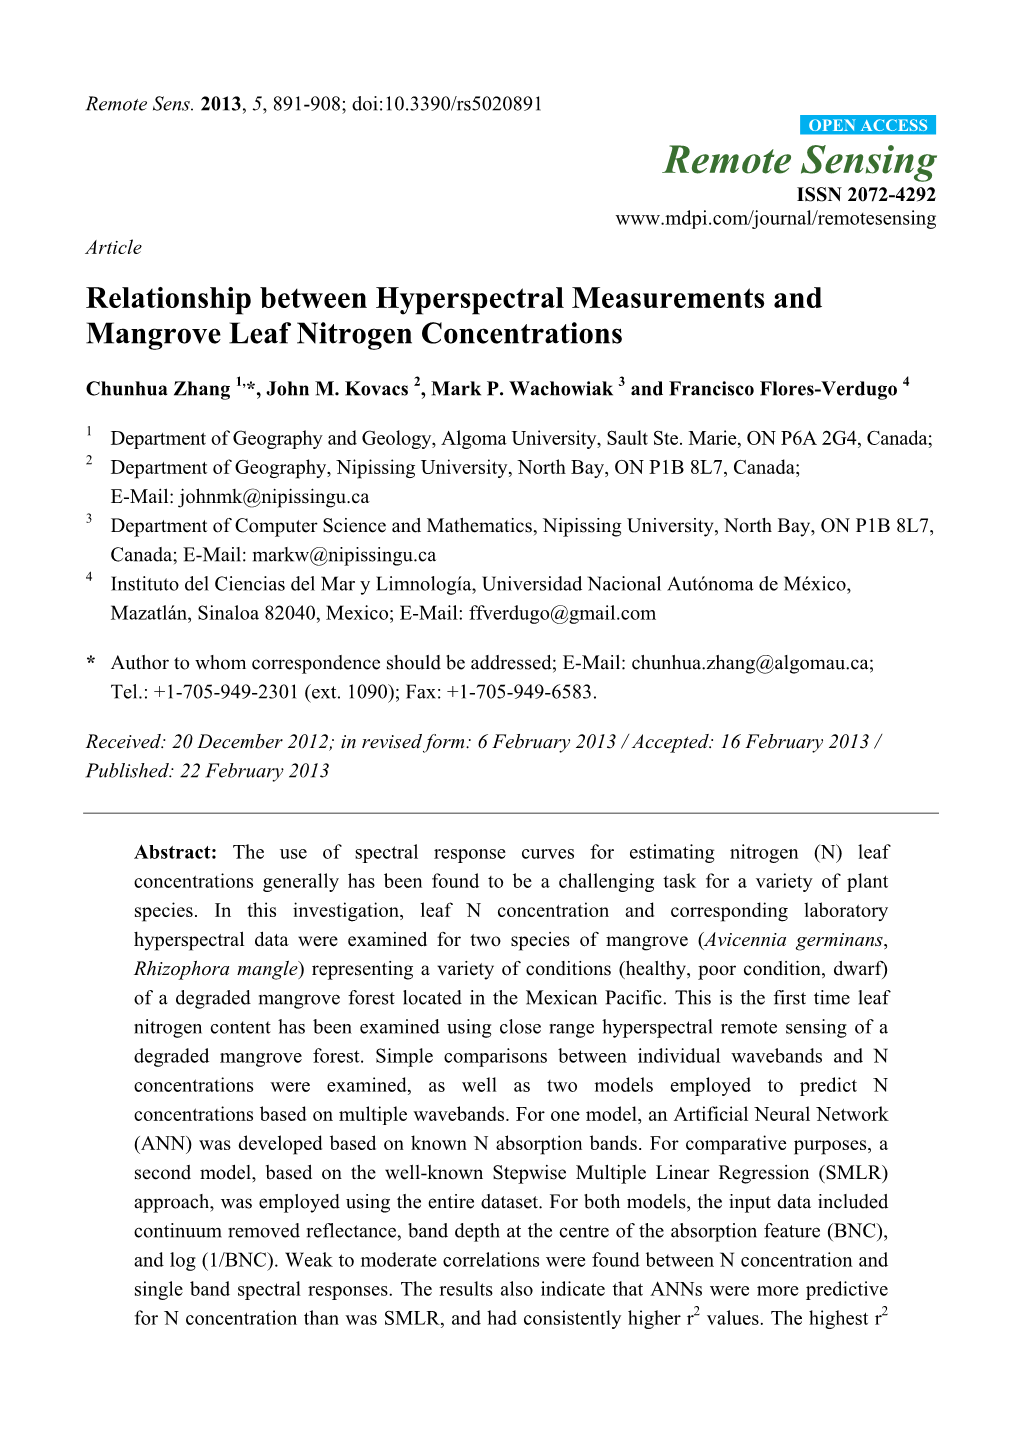 Relationship Between Hyperspectral Measurements and Mangrove Leaf Nitrogen Concentrations